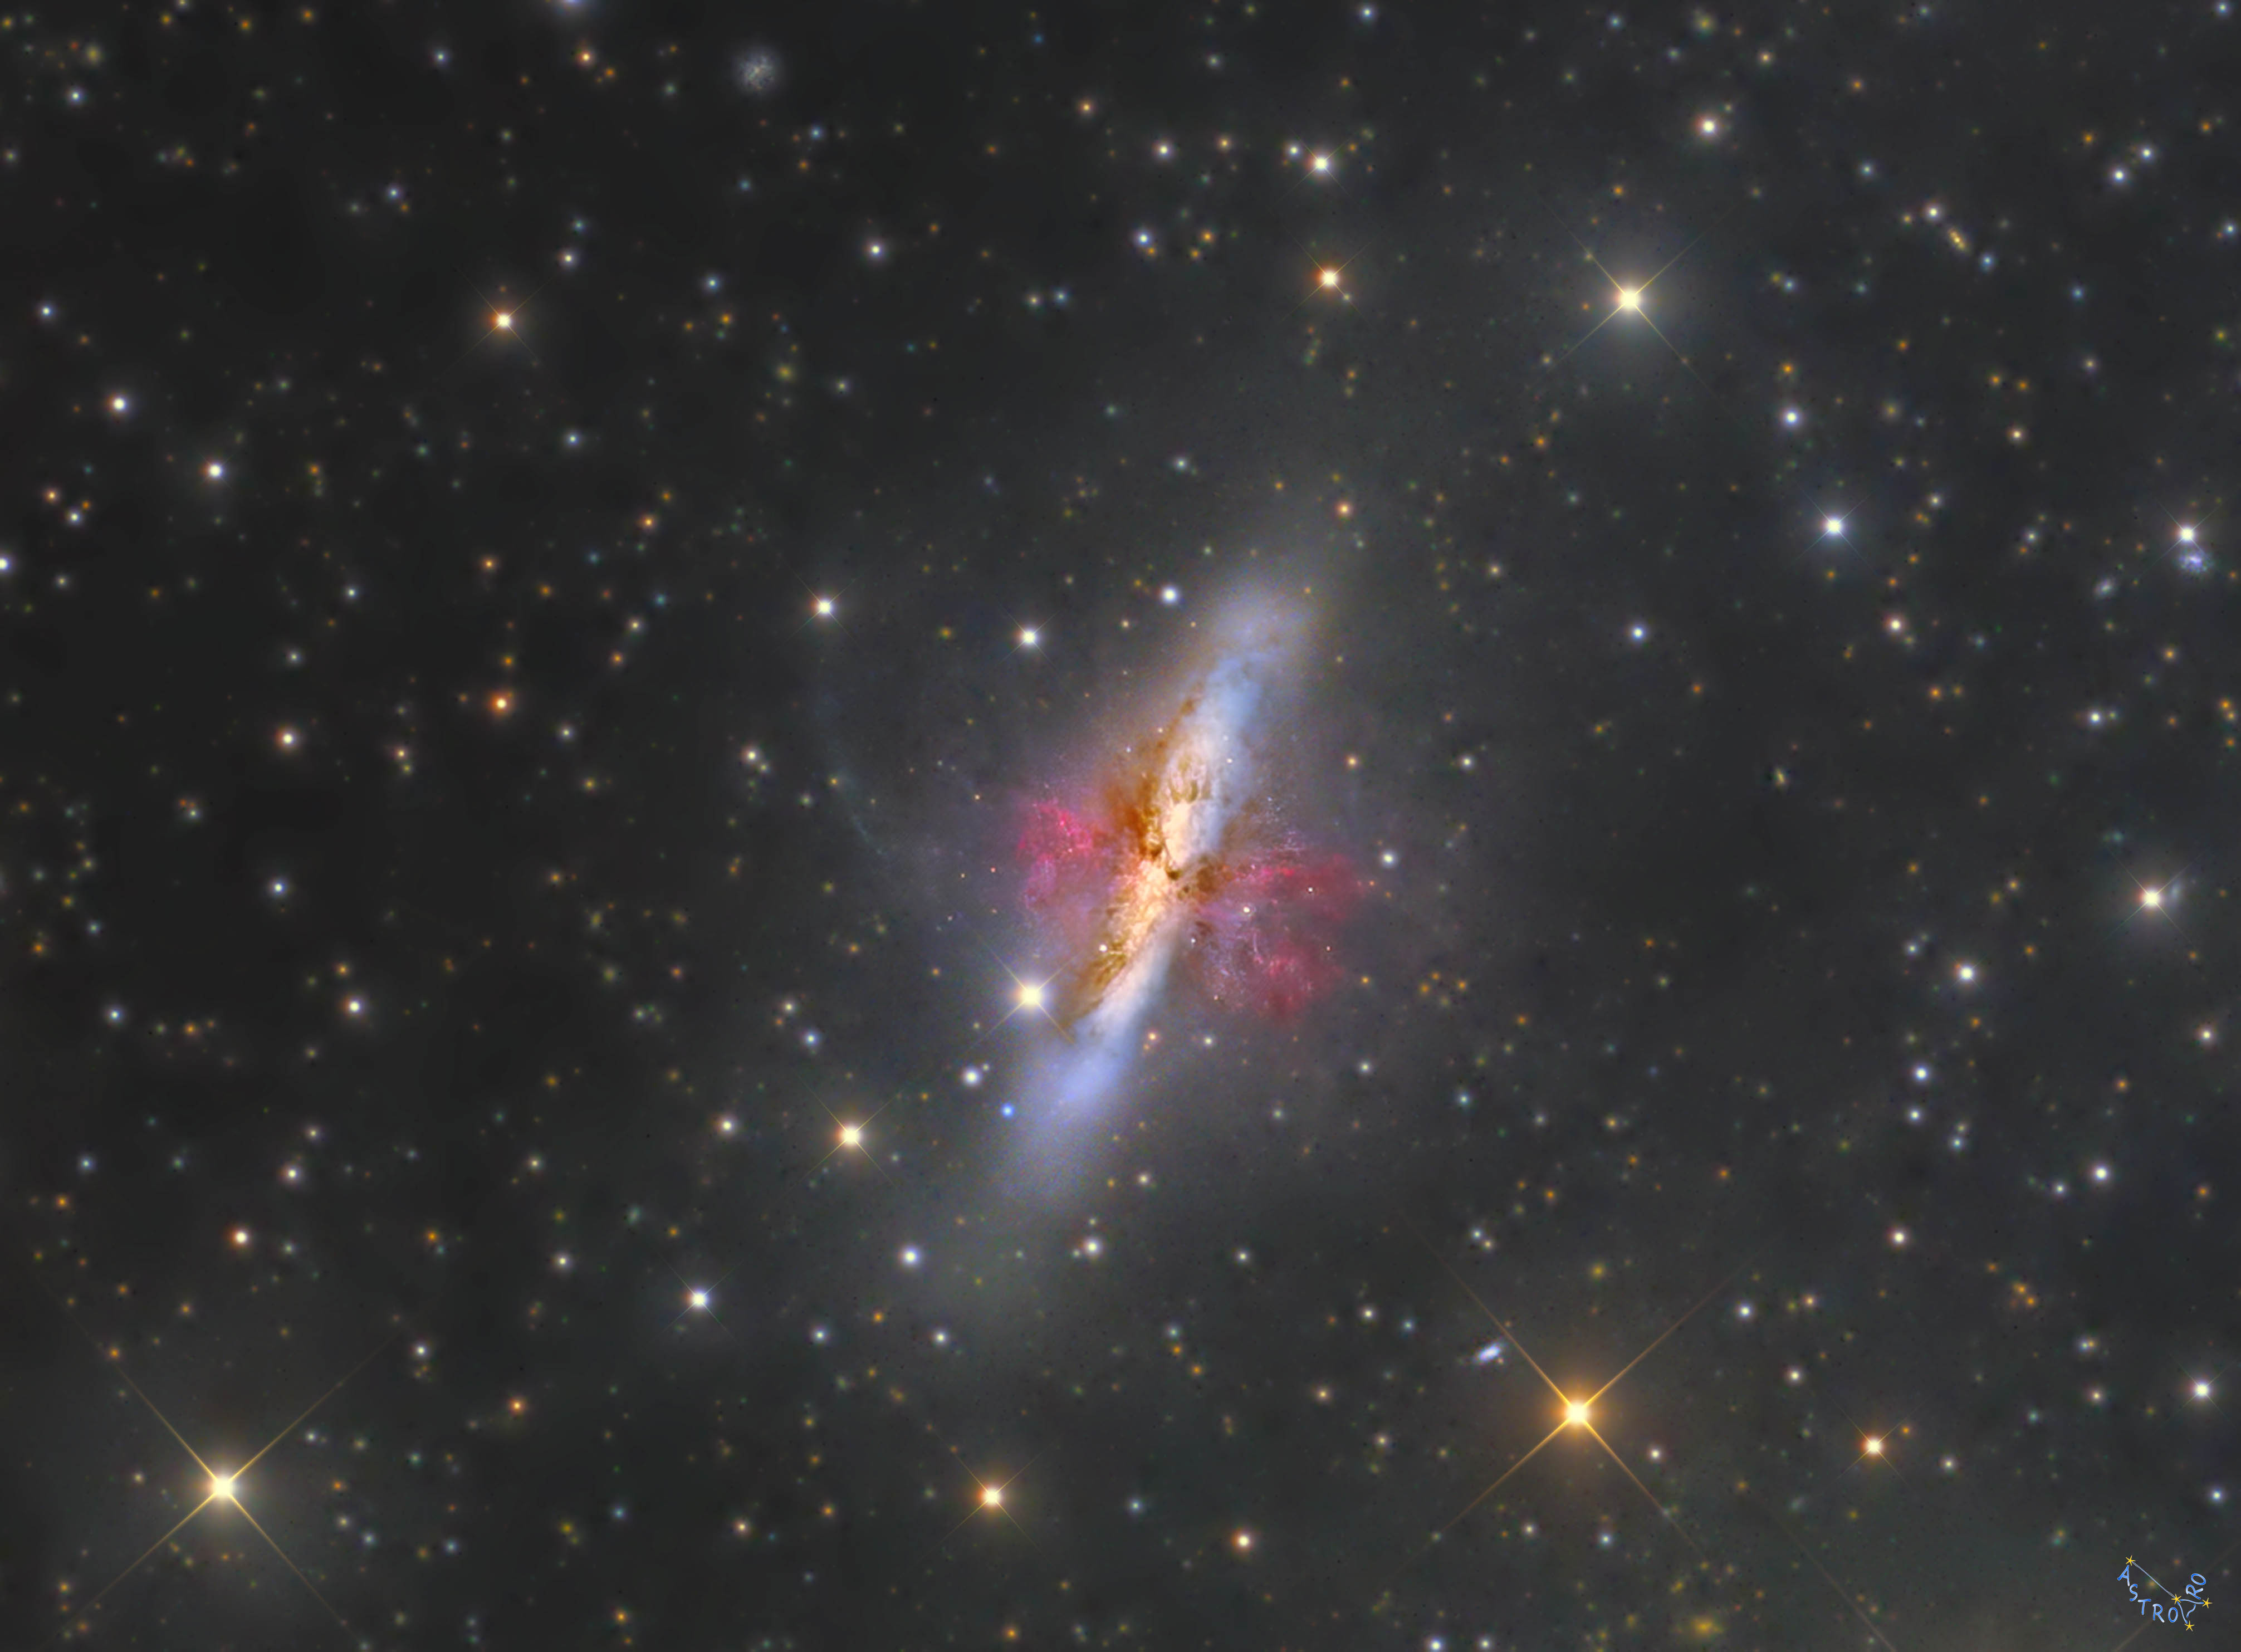 M82: Starburst Galaxy with a Superwind